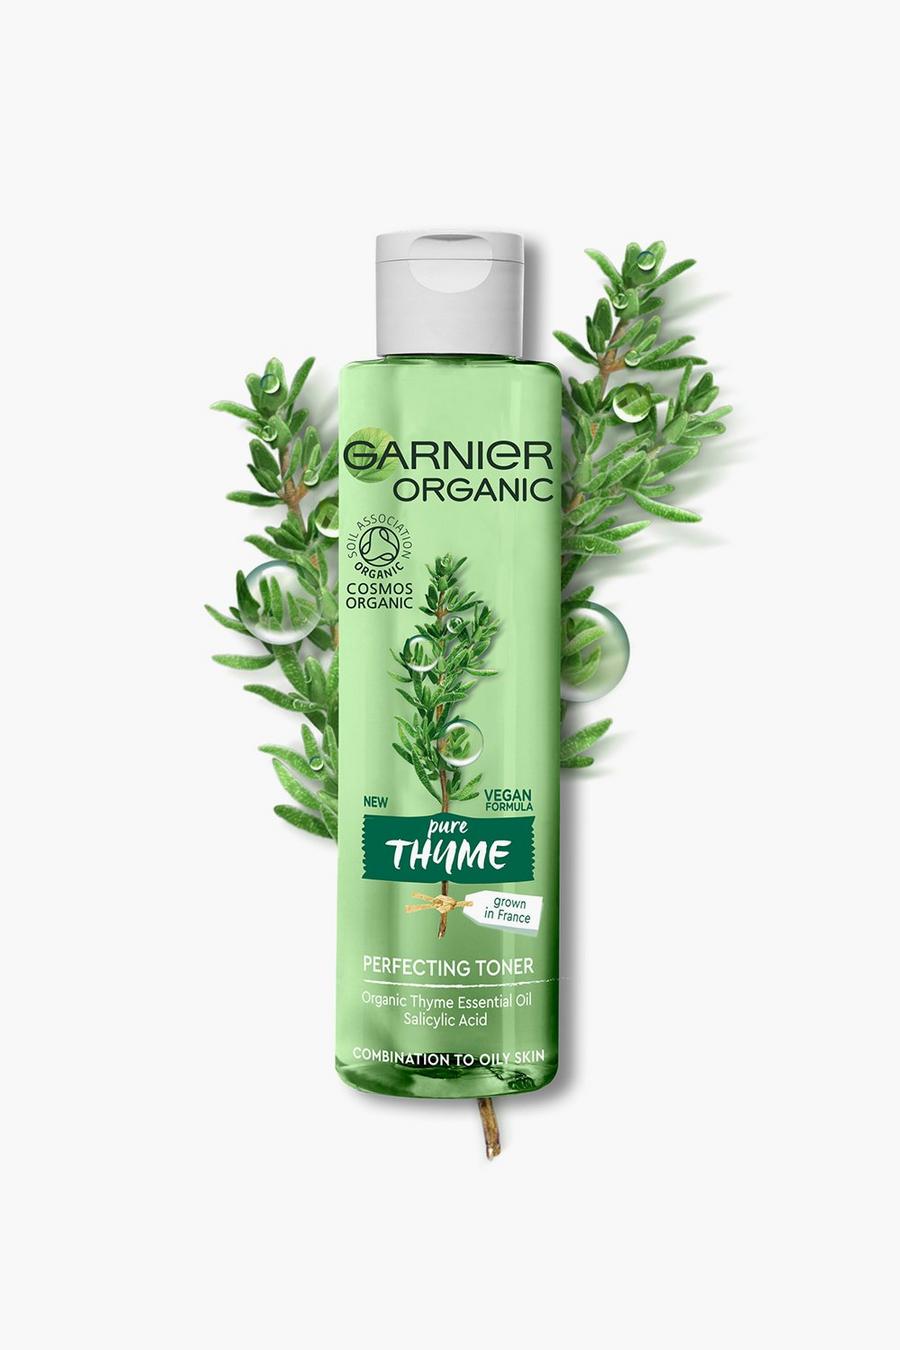 Green grün Garnier Organic Thyme Perfecting Toner 150ml